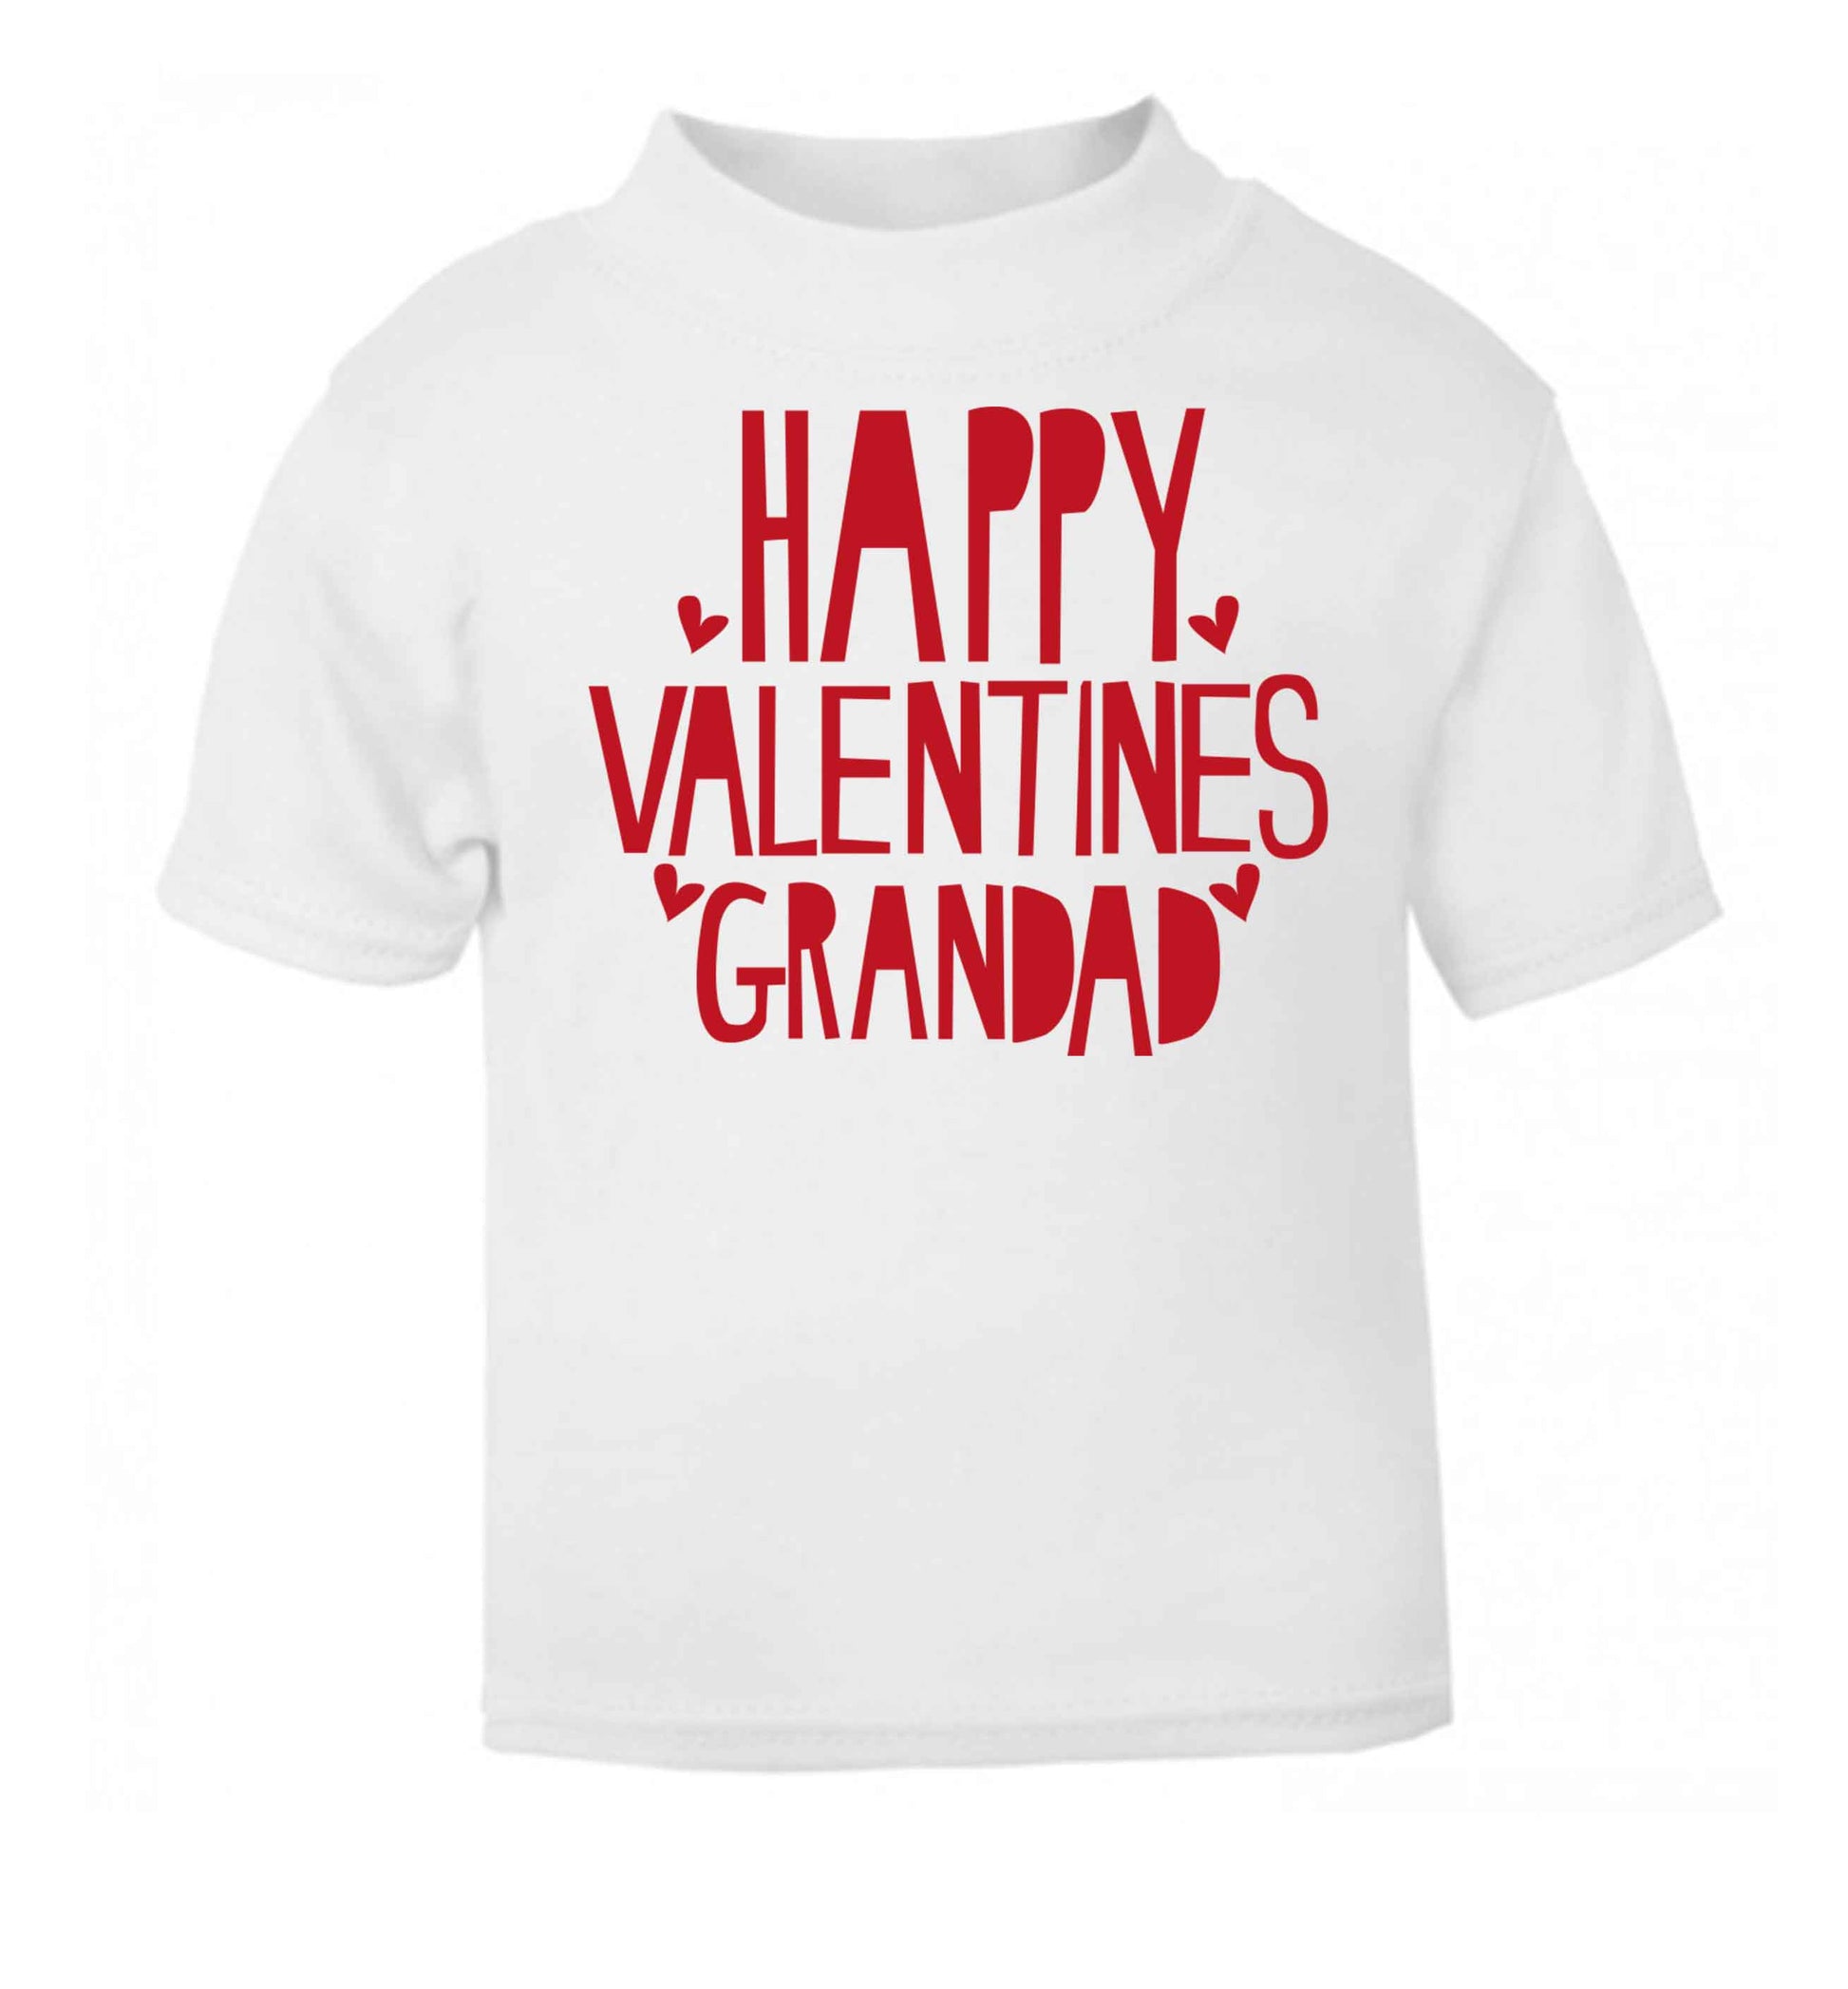 Happy valentines grandad white baby toddler Tshirt 2 Years